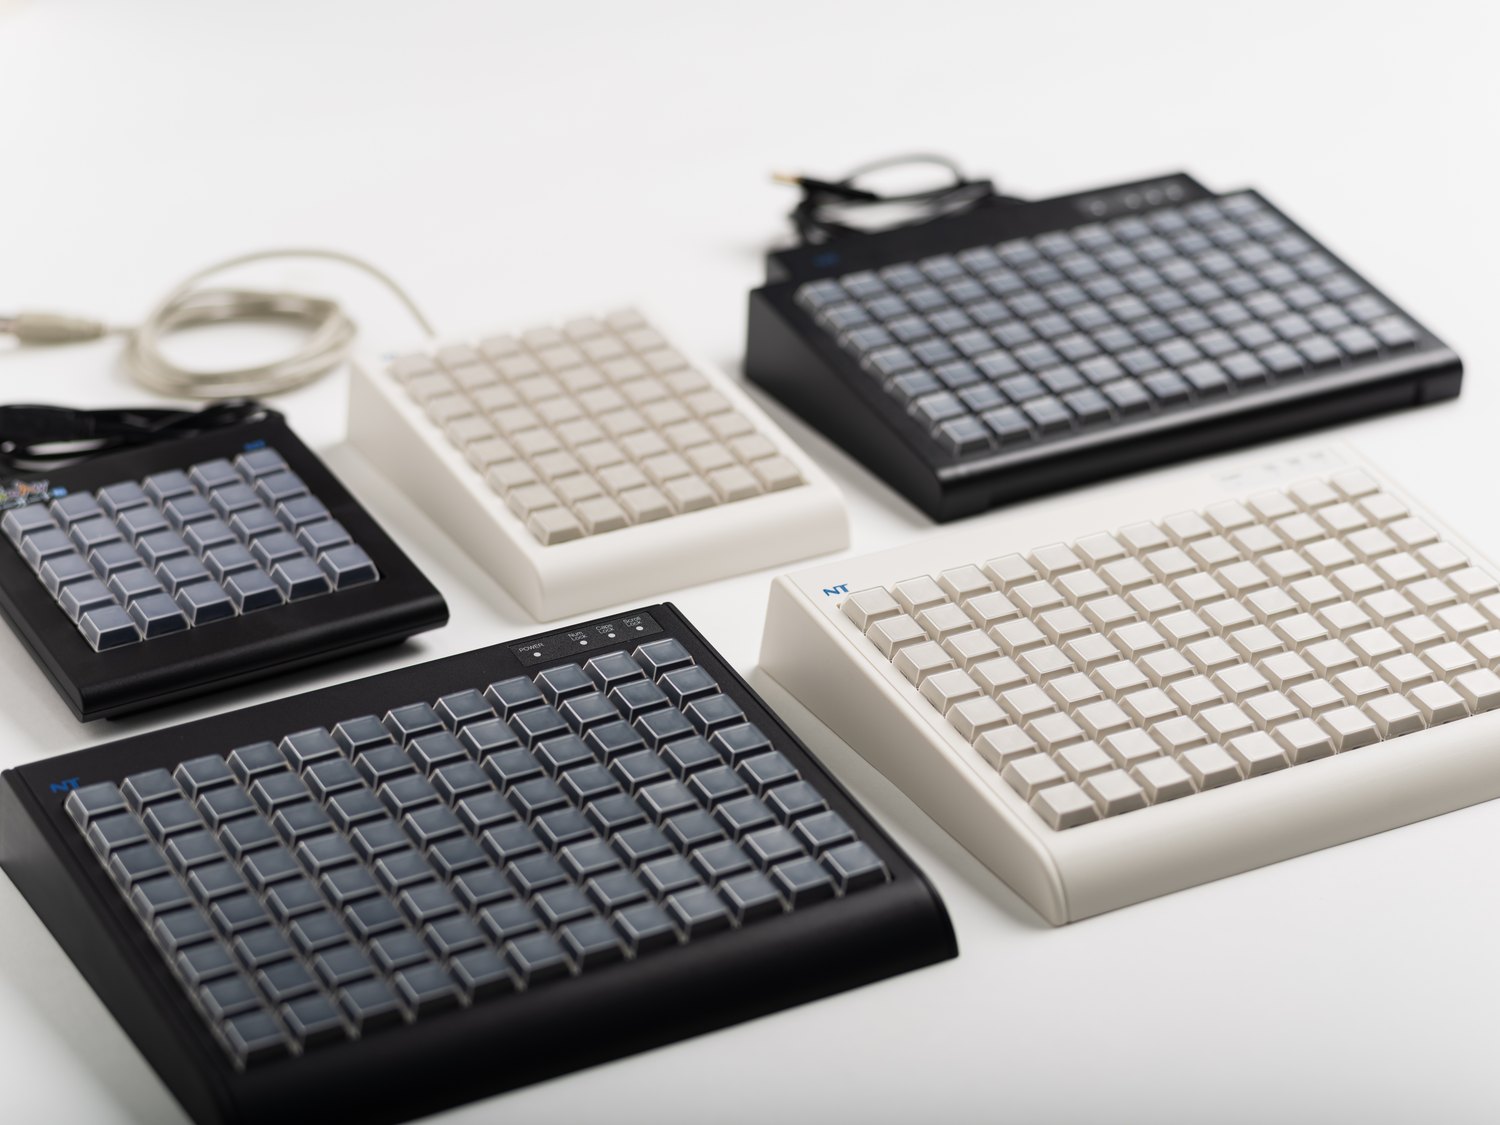 Industrial custom Keyboards